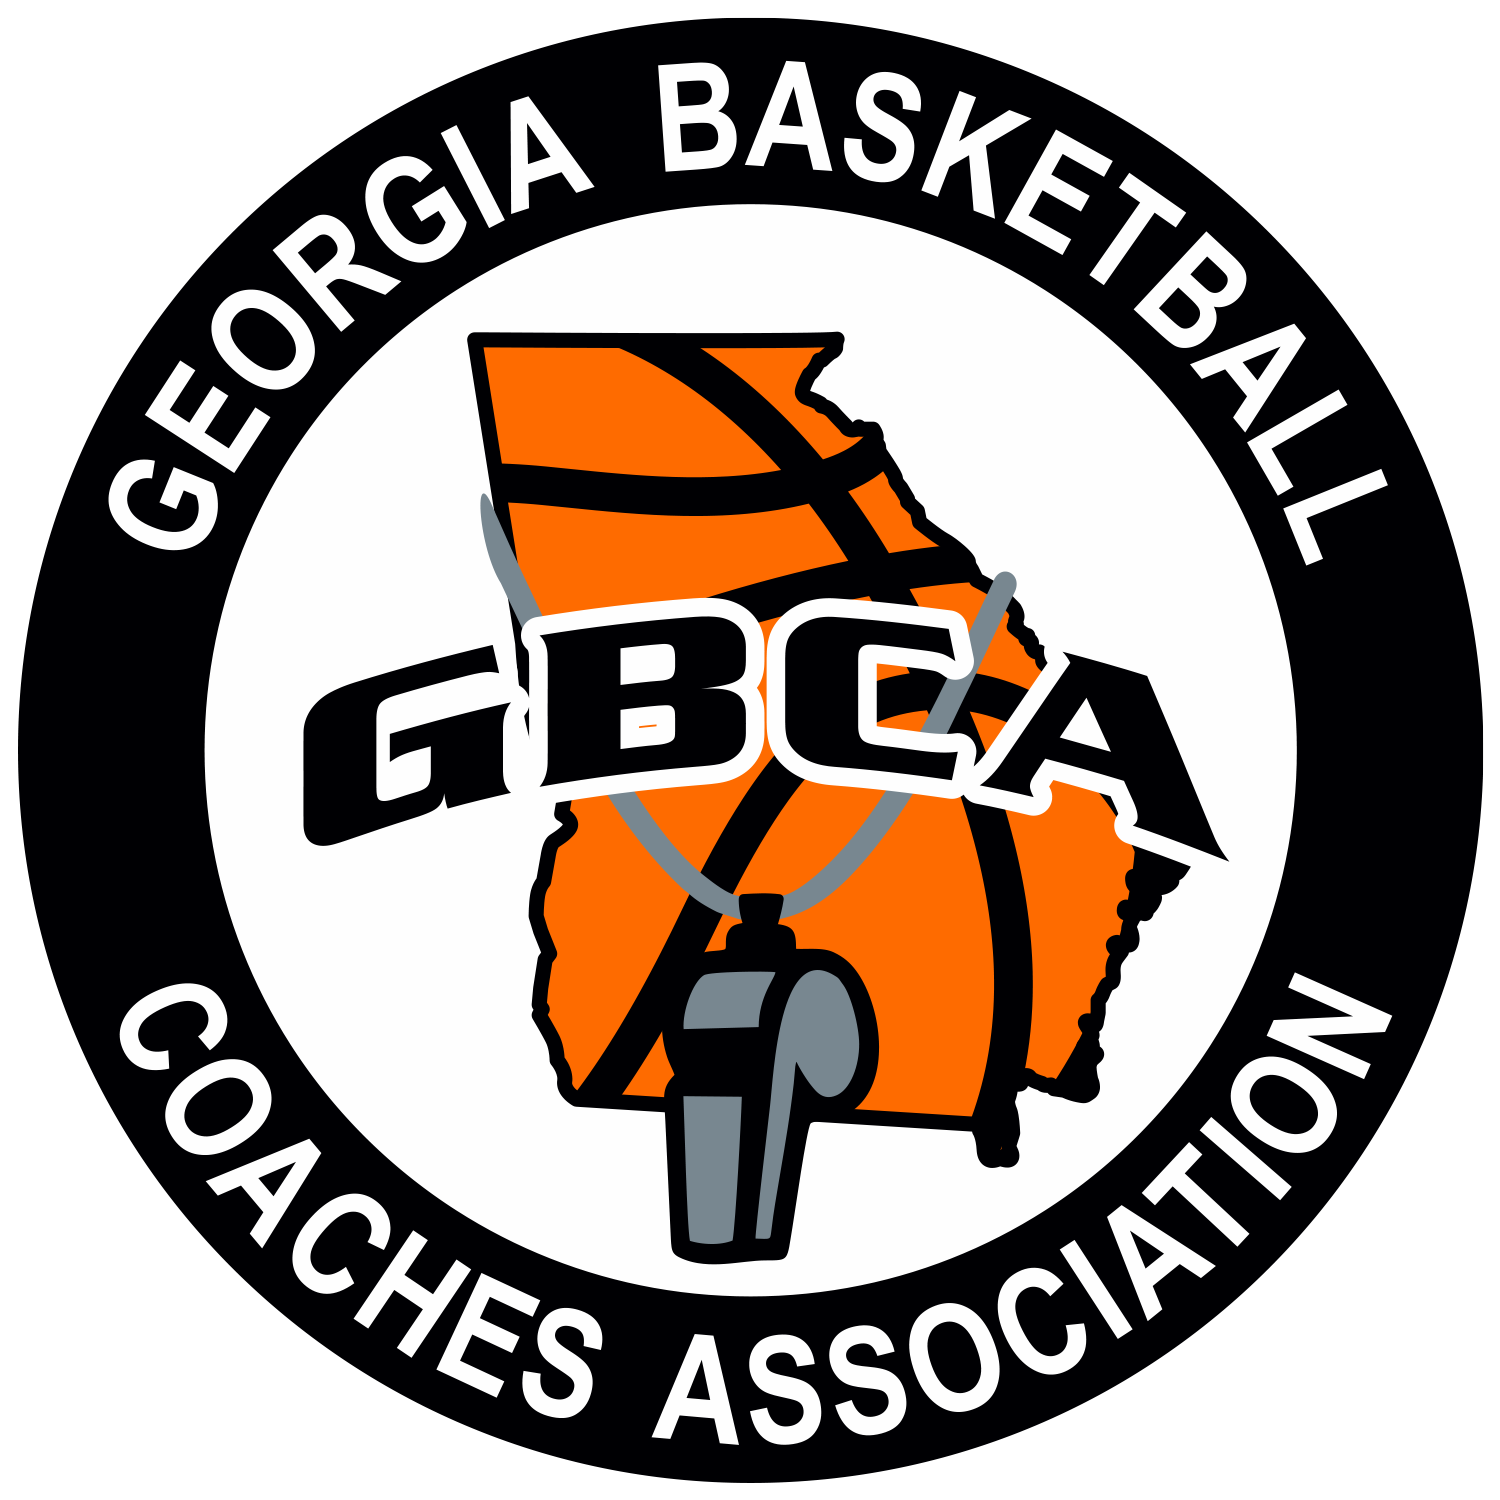 gbca-logo